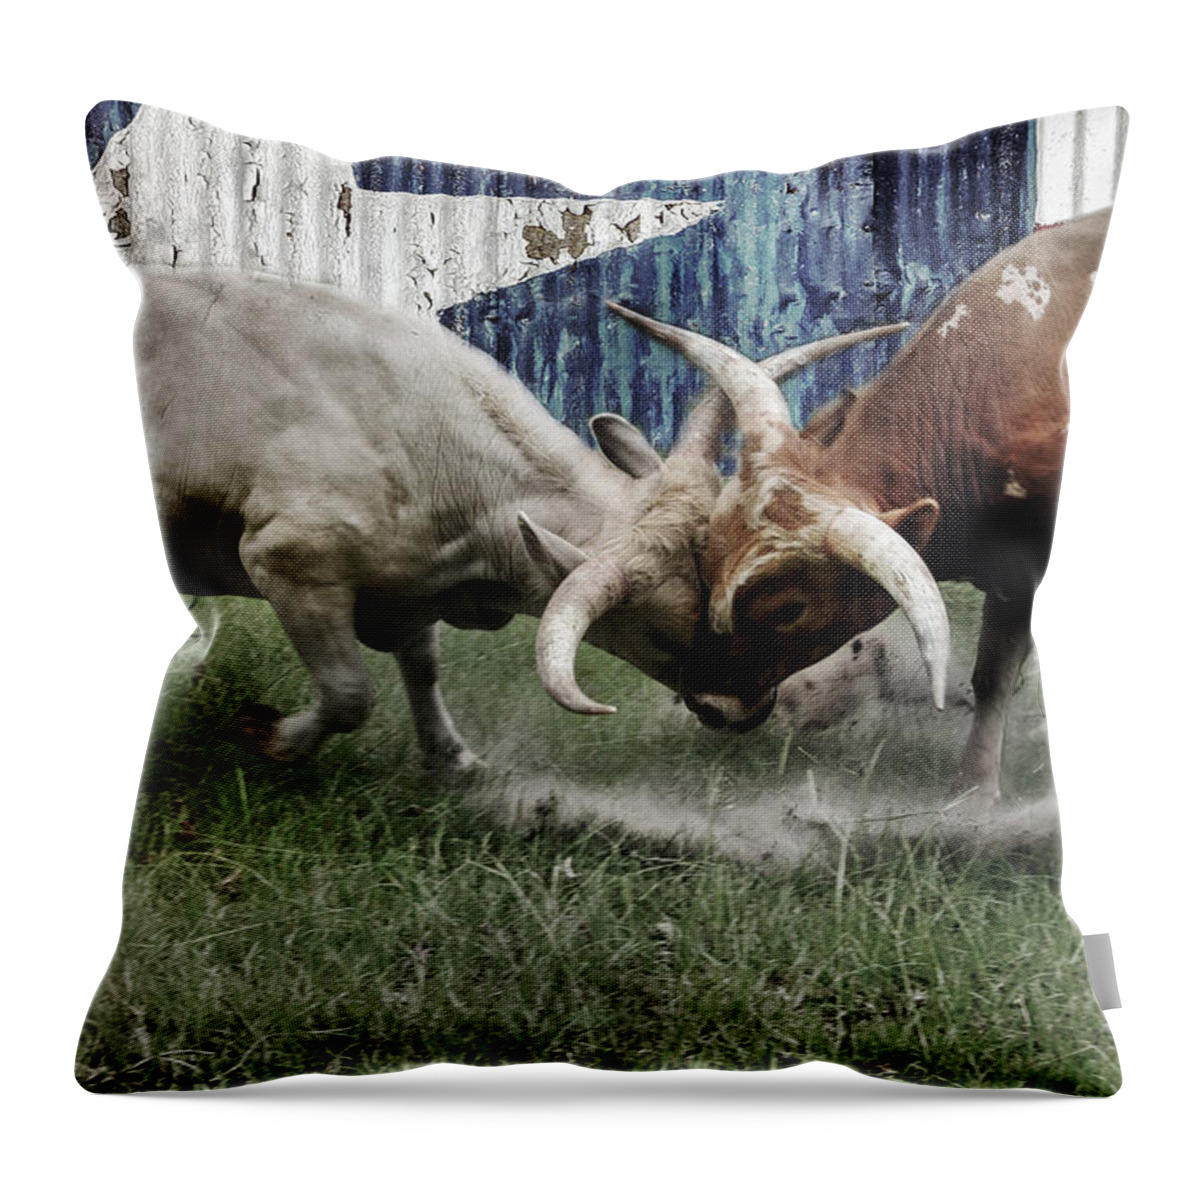 Texas Throw Pillow featuring the digital art Texas Bull Fight by Brad Thornton